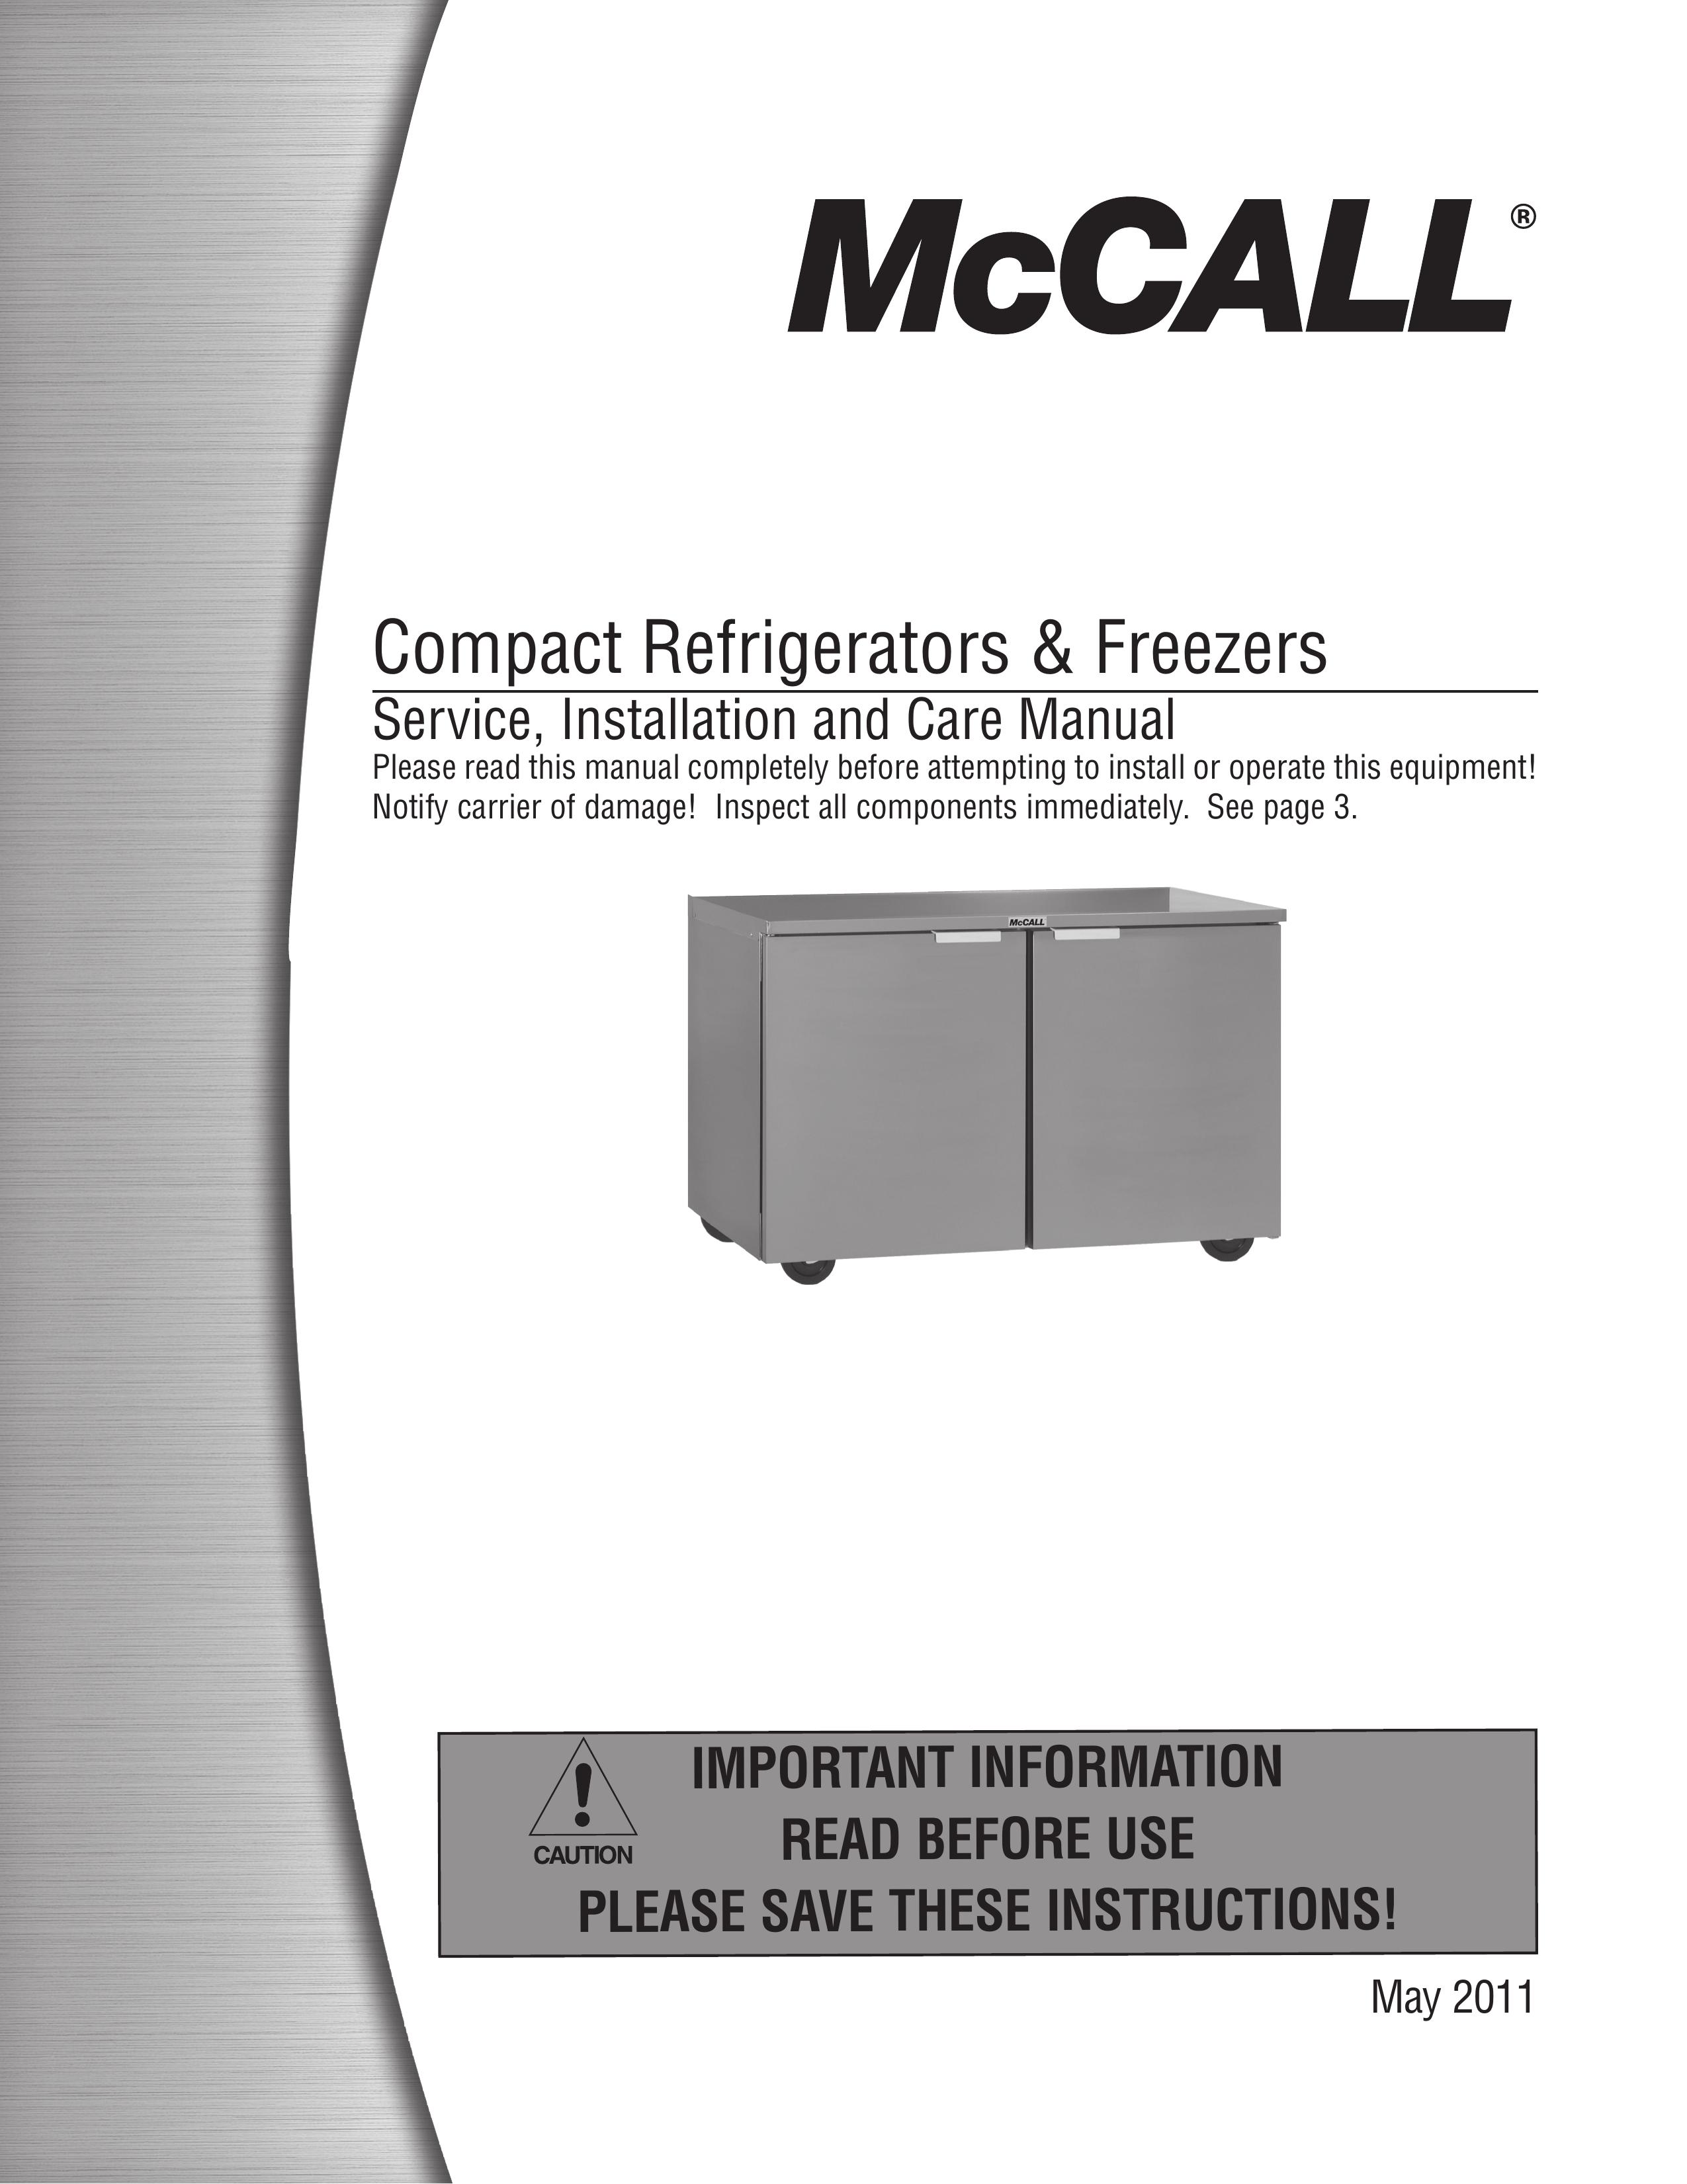 McCall Refrigeration MCCR48 Refrigerator User Manual